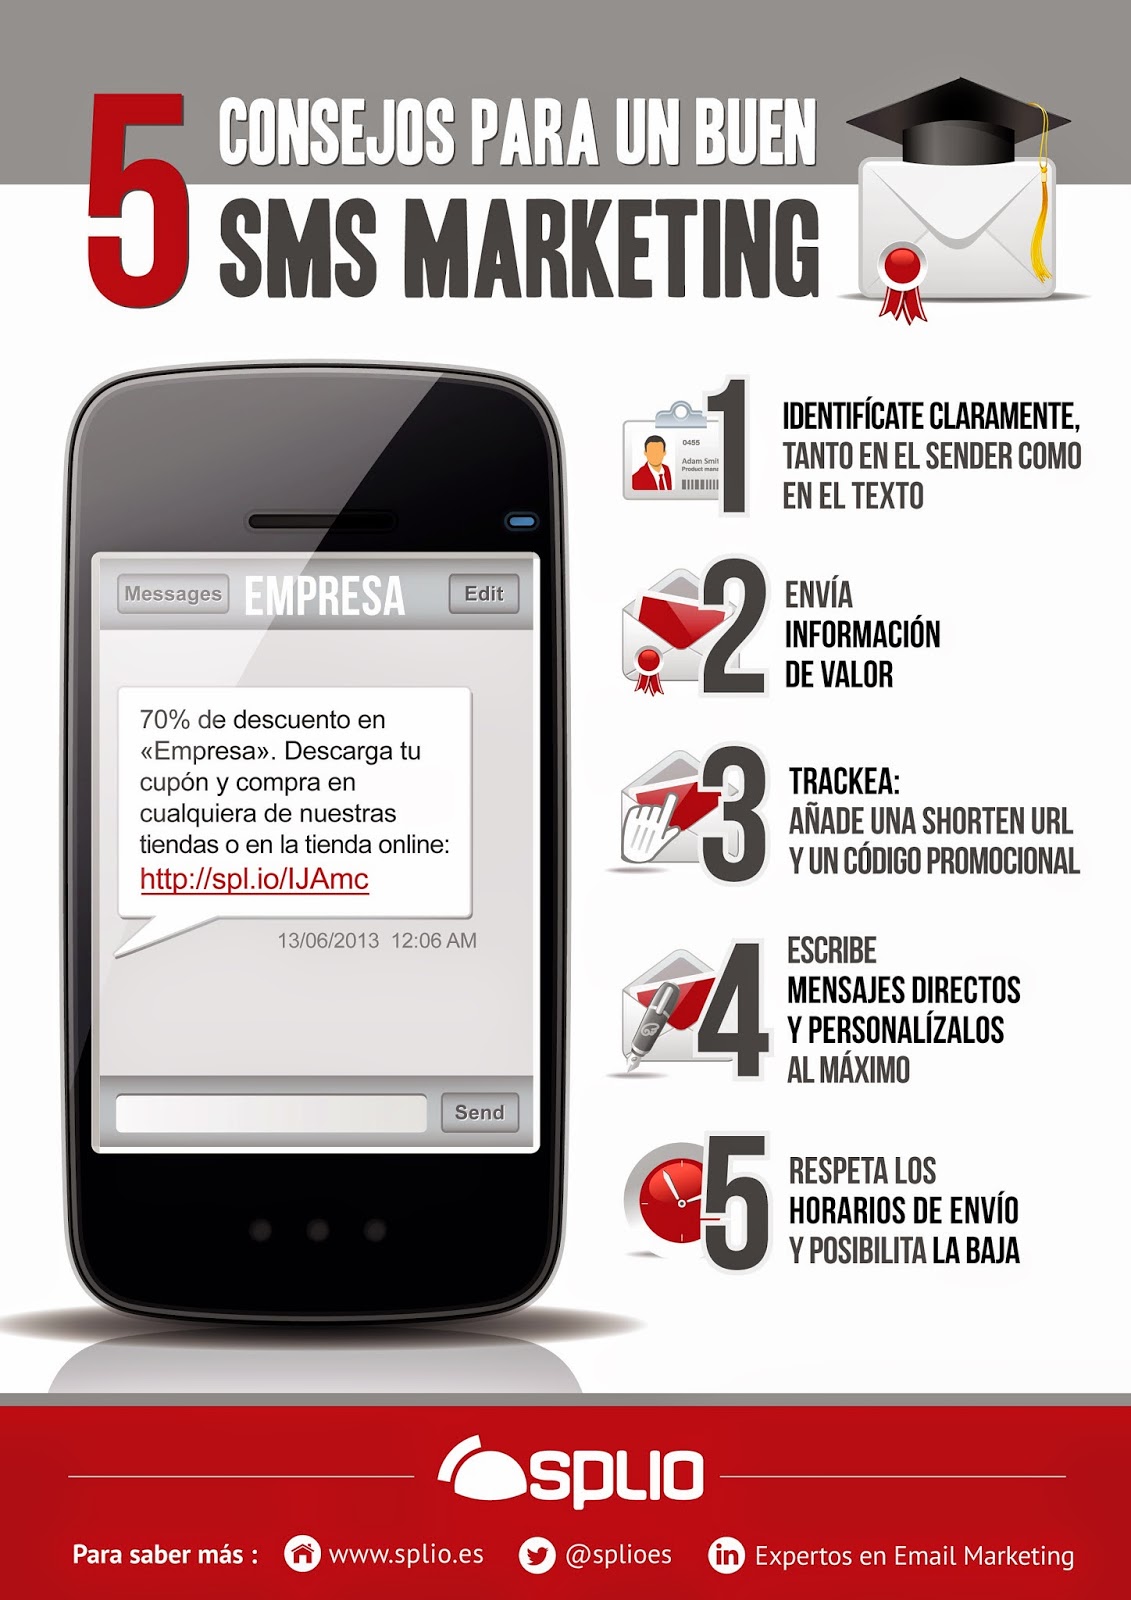 Ventajas del SMS marketing para conservar clientes